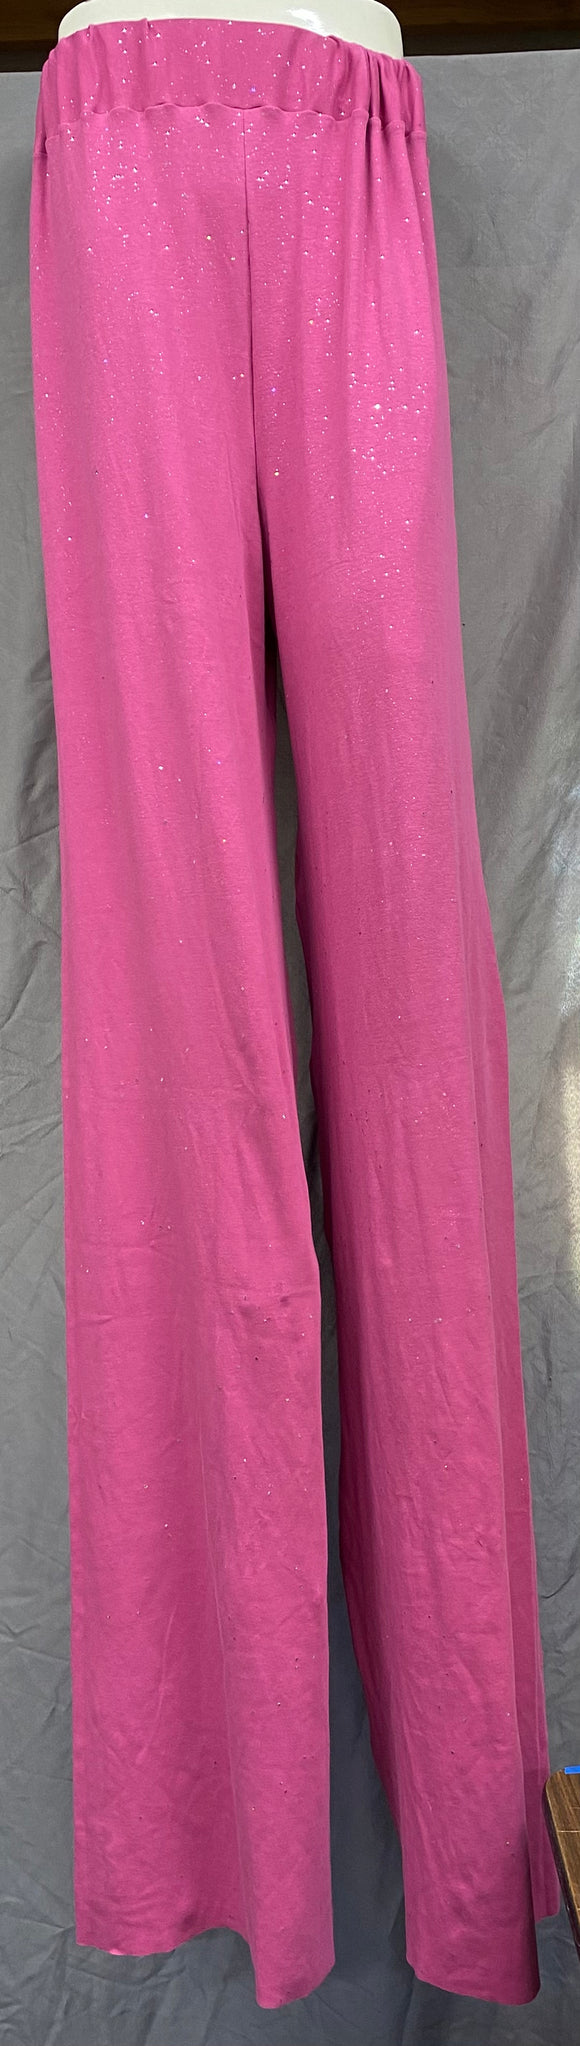 Stilt Pants - Pink Glitter 67